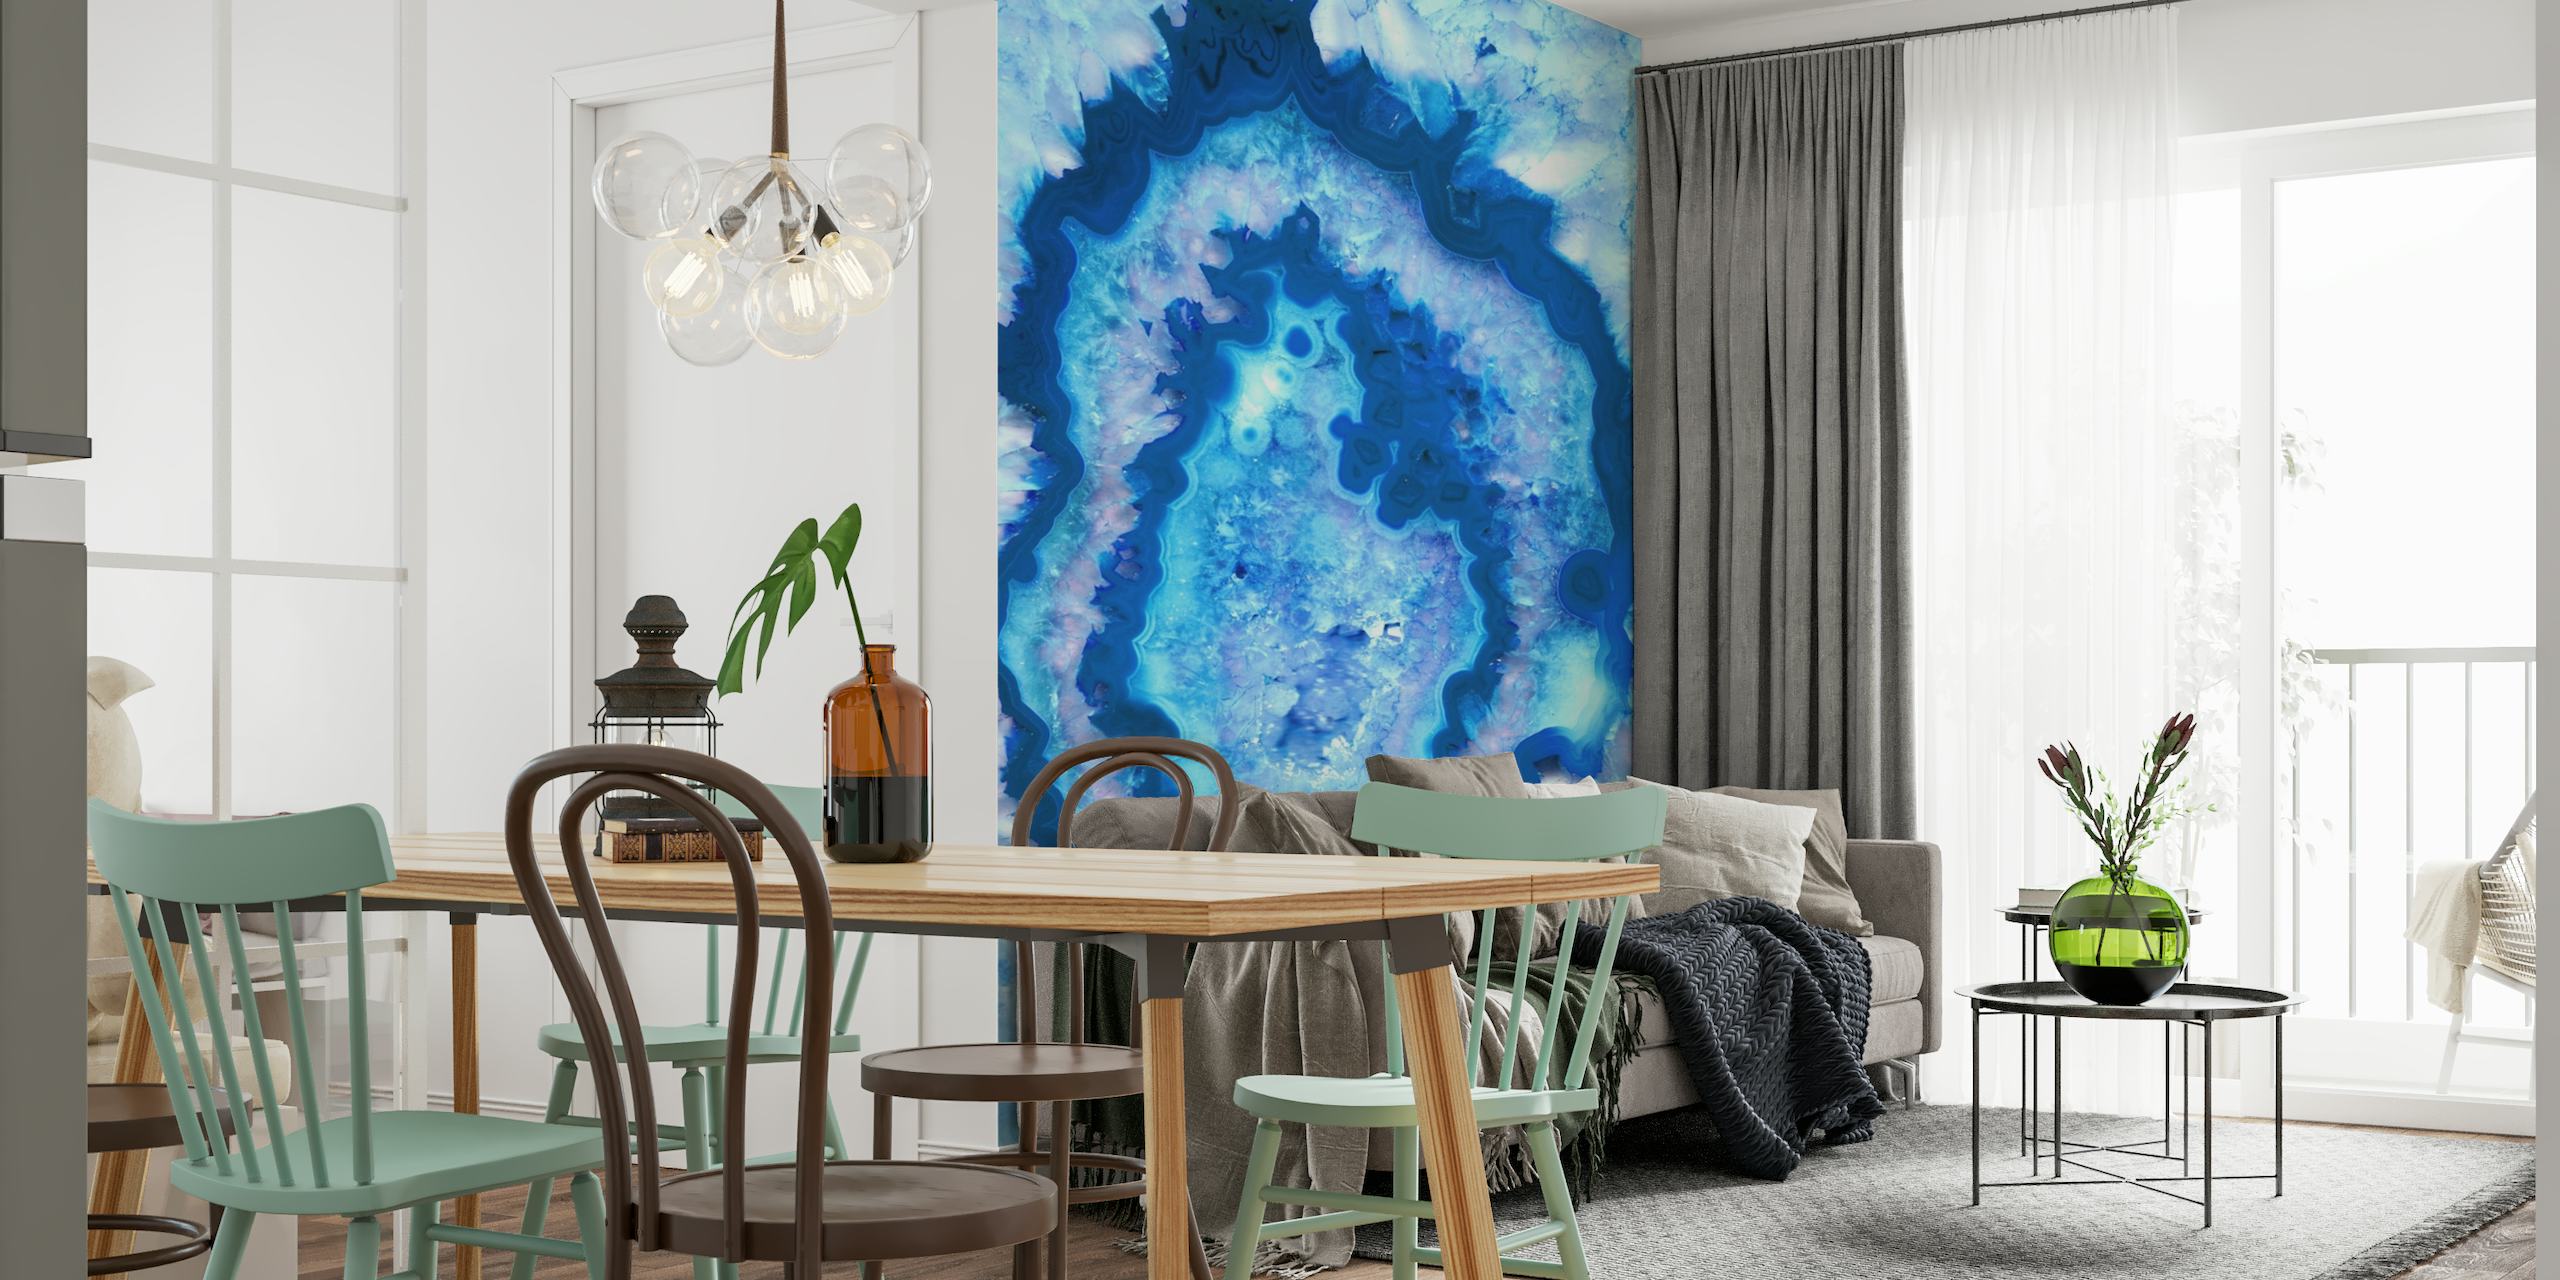 Agate Ocean Dream 1 wallpaper